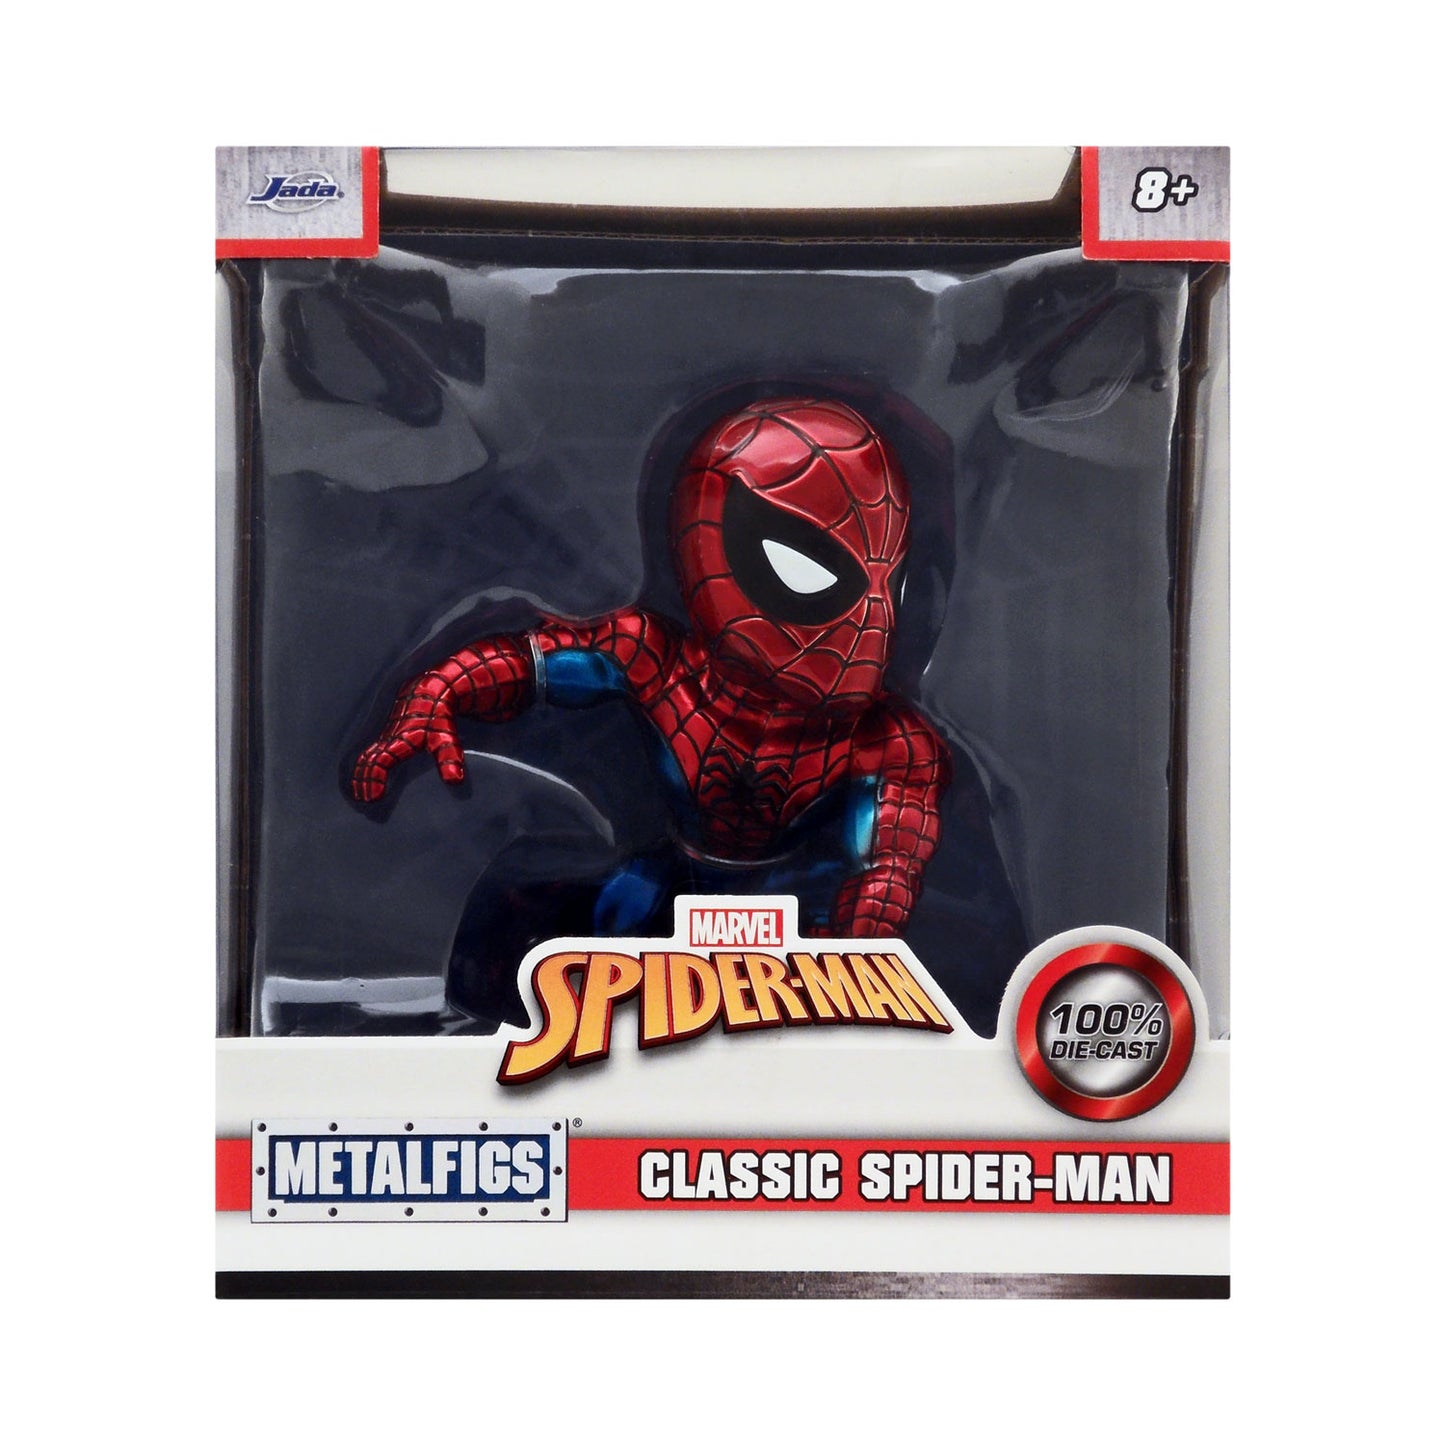 MetalFigs Classic Spider-Man 4-Inch Die-Cast Figure